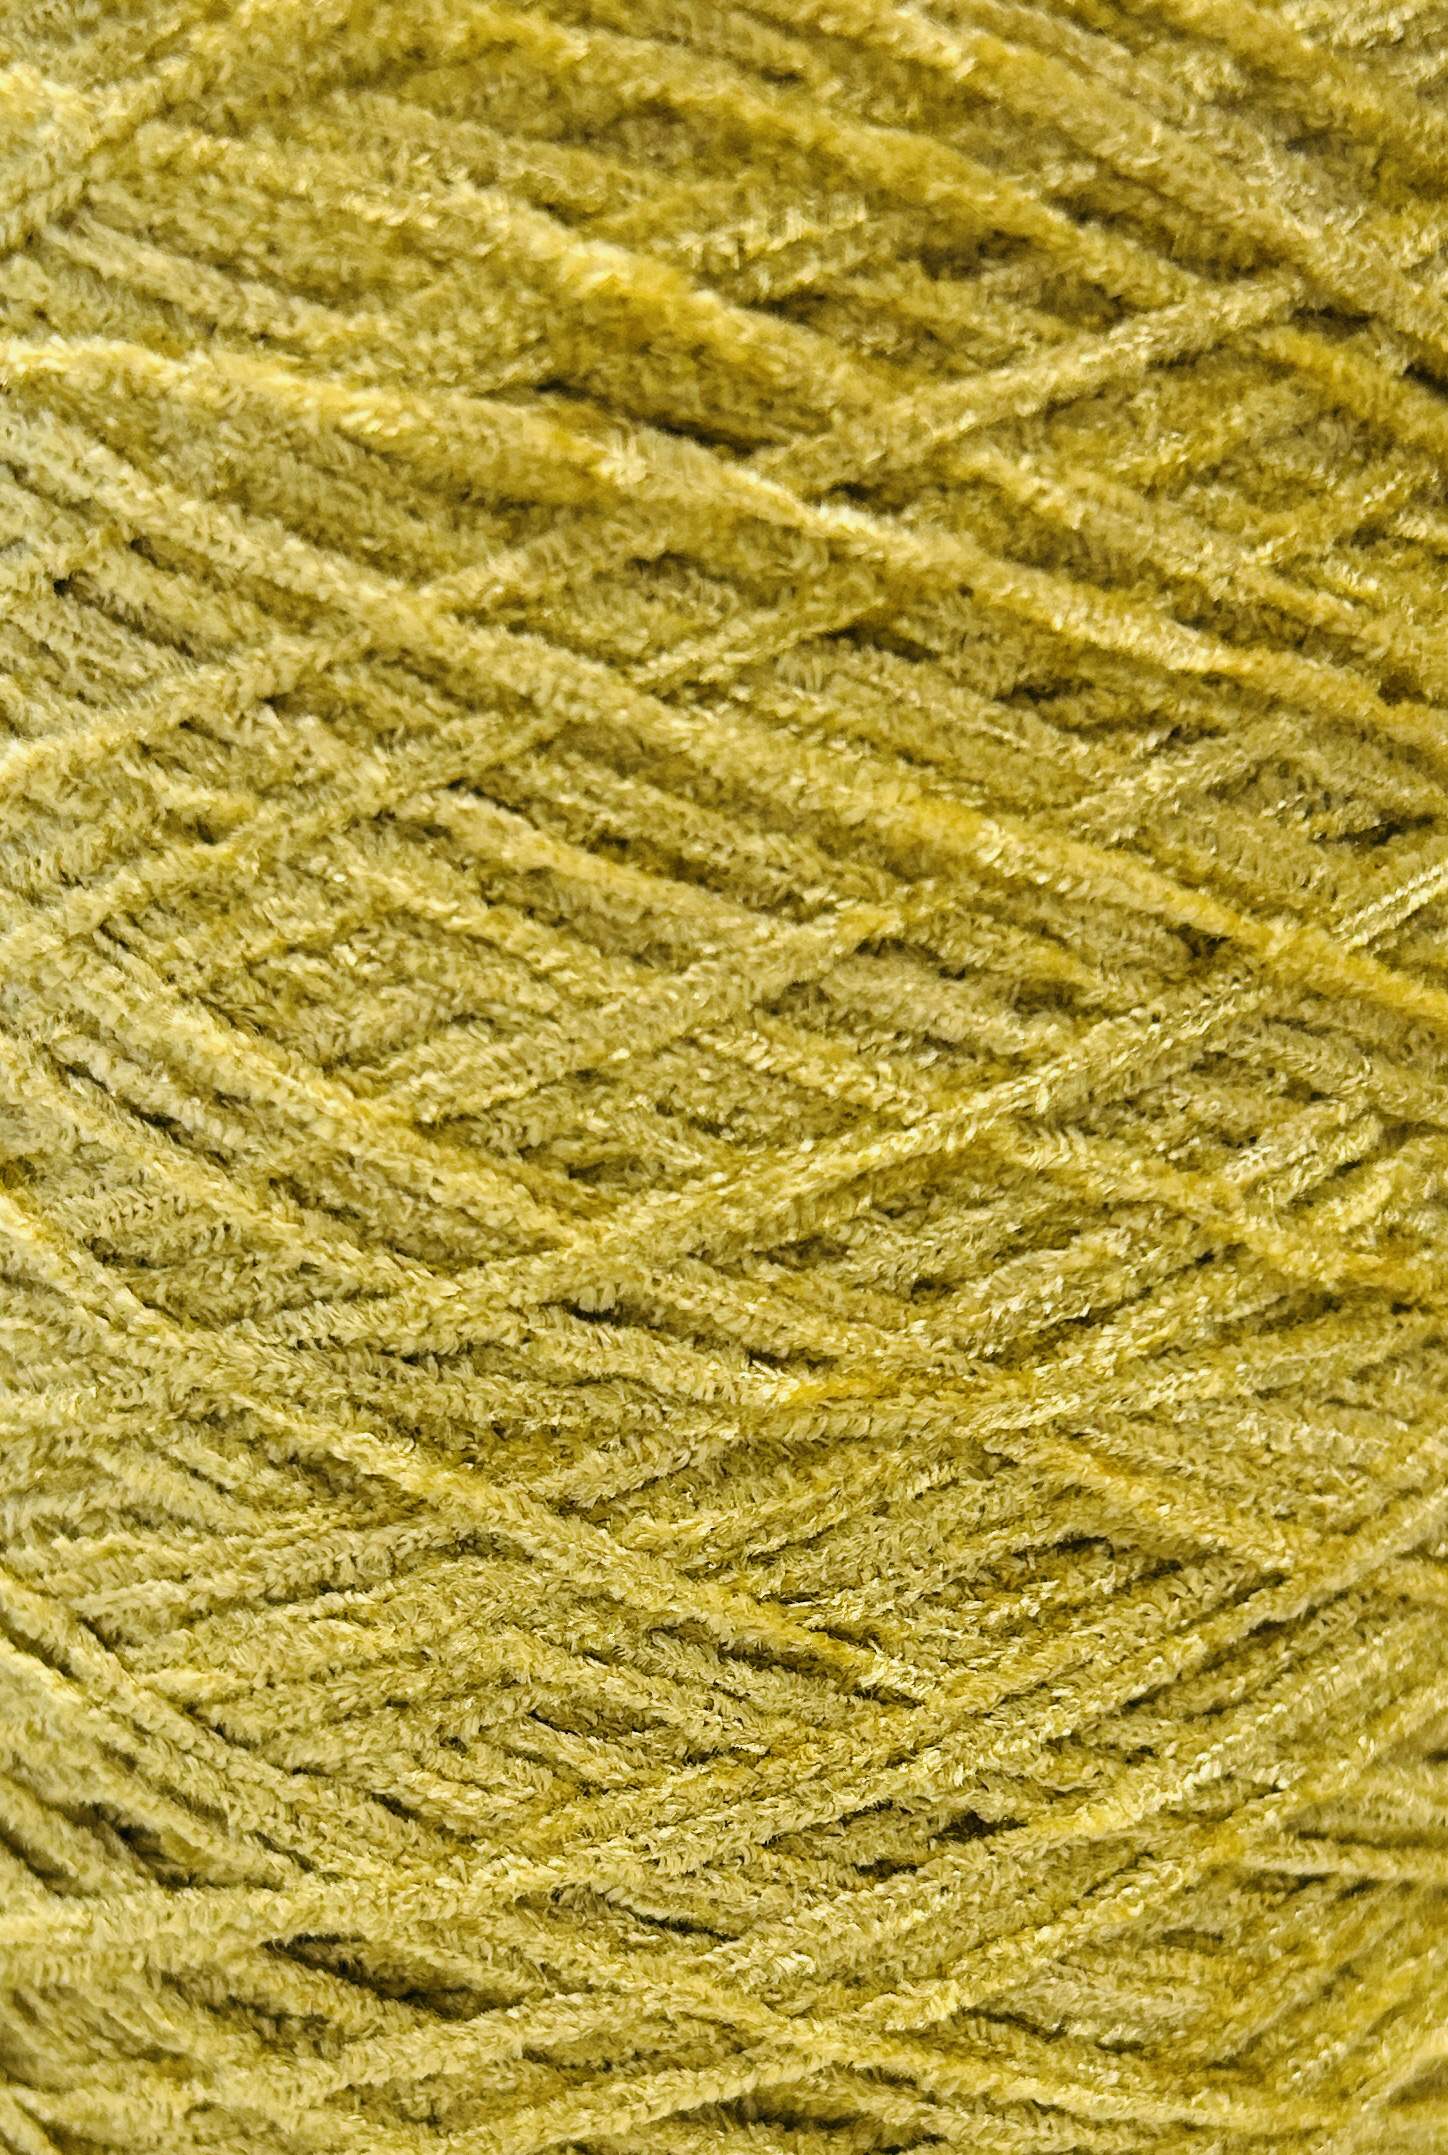 Rayon Chenille Yarn - Made in America Yarns